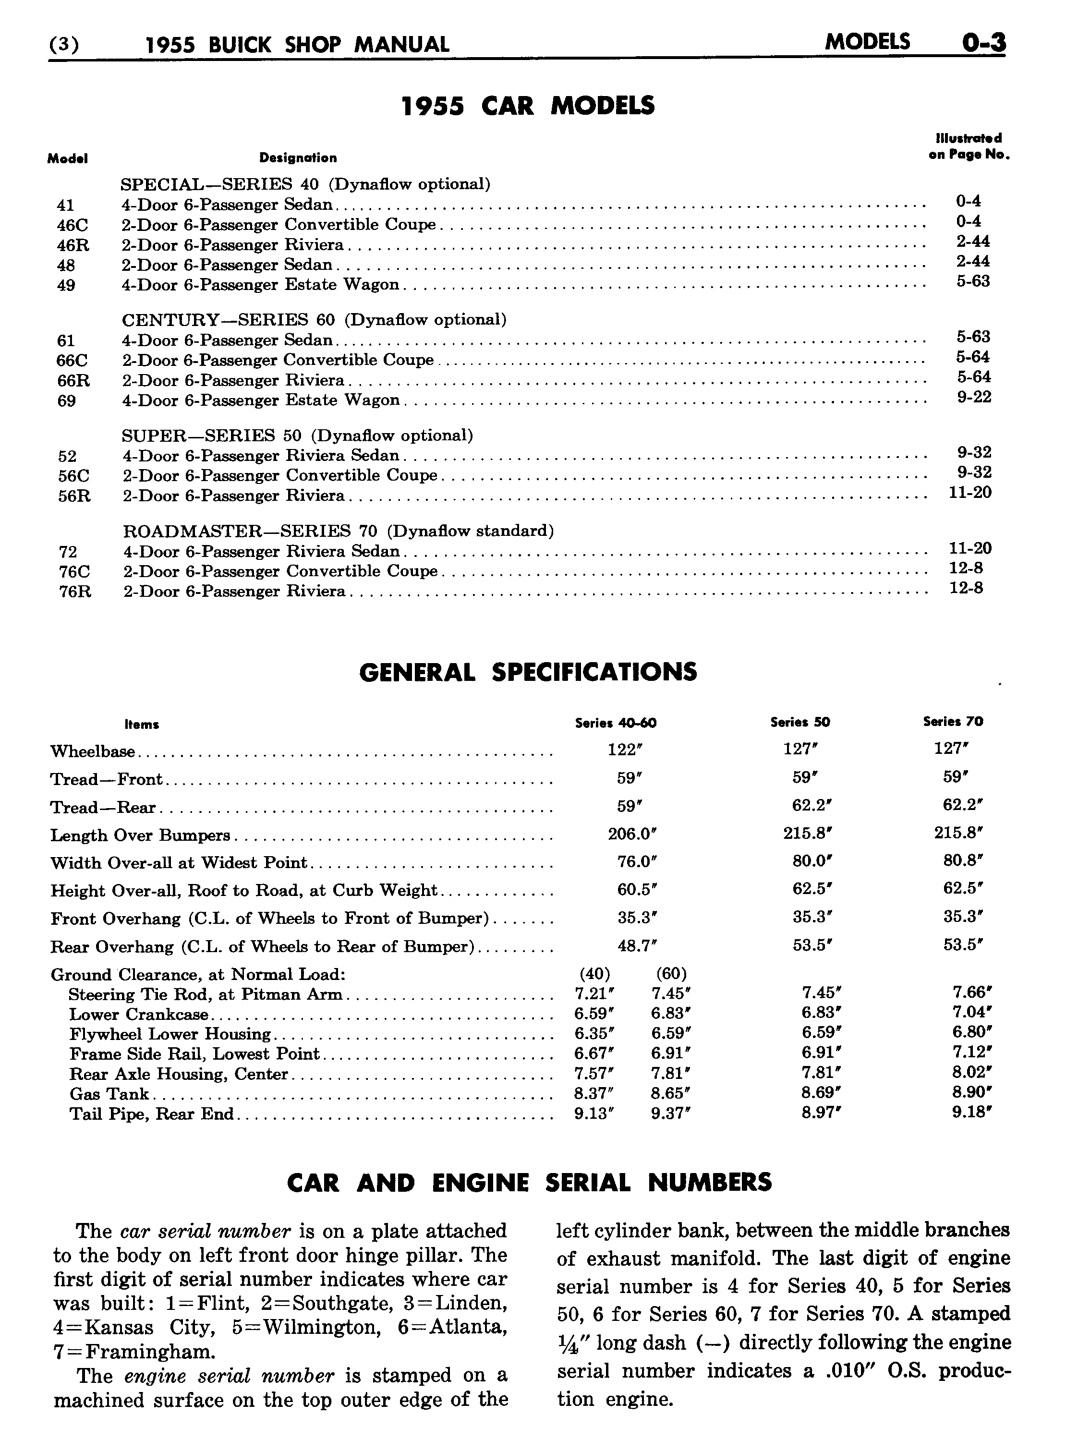 n_01 1955 Buick Shop Manual - Gen Information-005-005.jpg